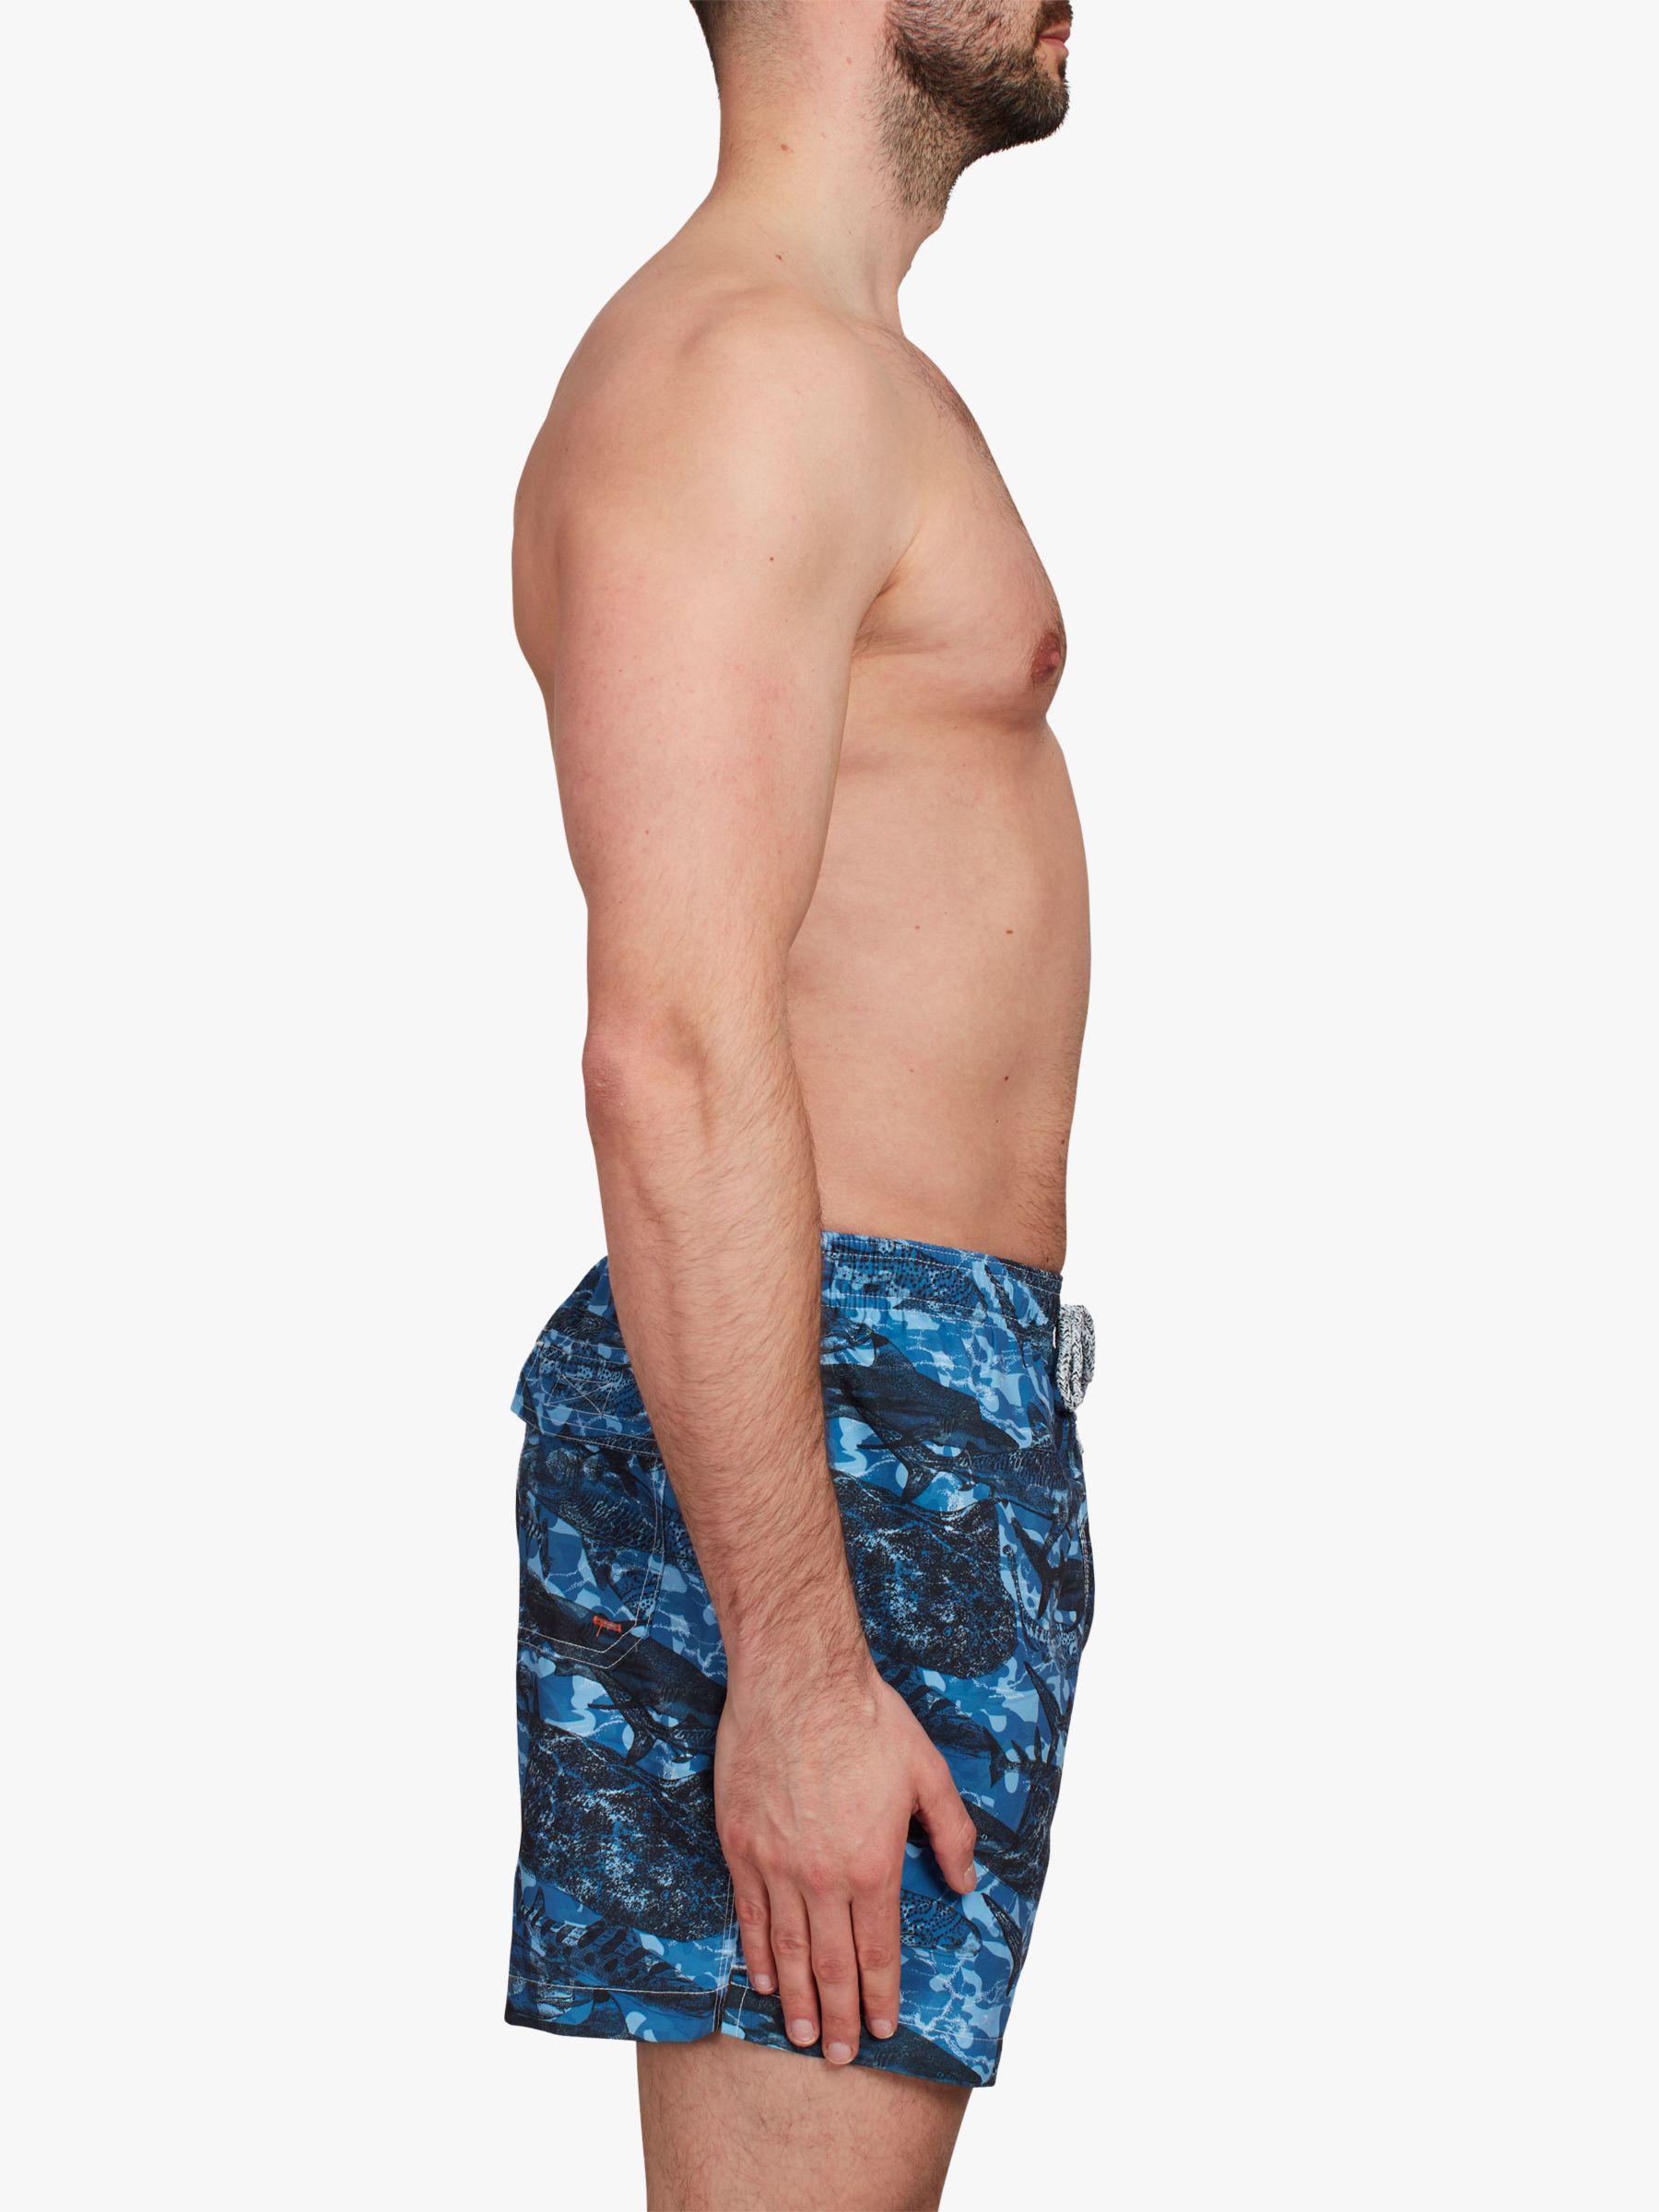 Simon Carter Shark Camouflage Swim Shorts, Blue, S